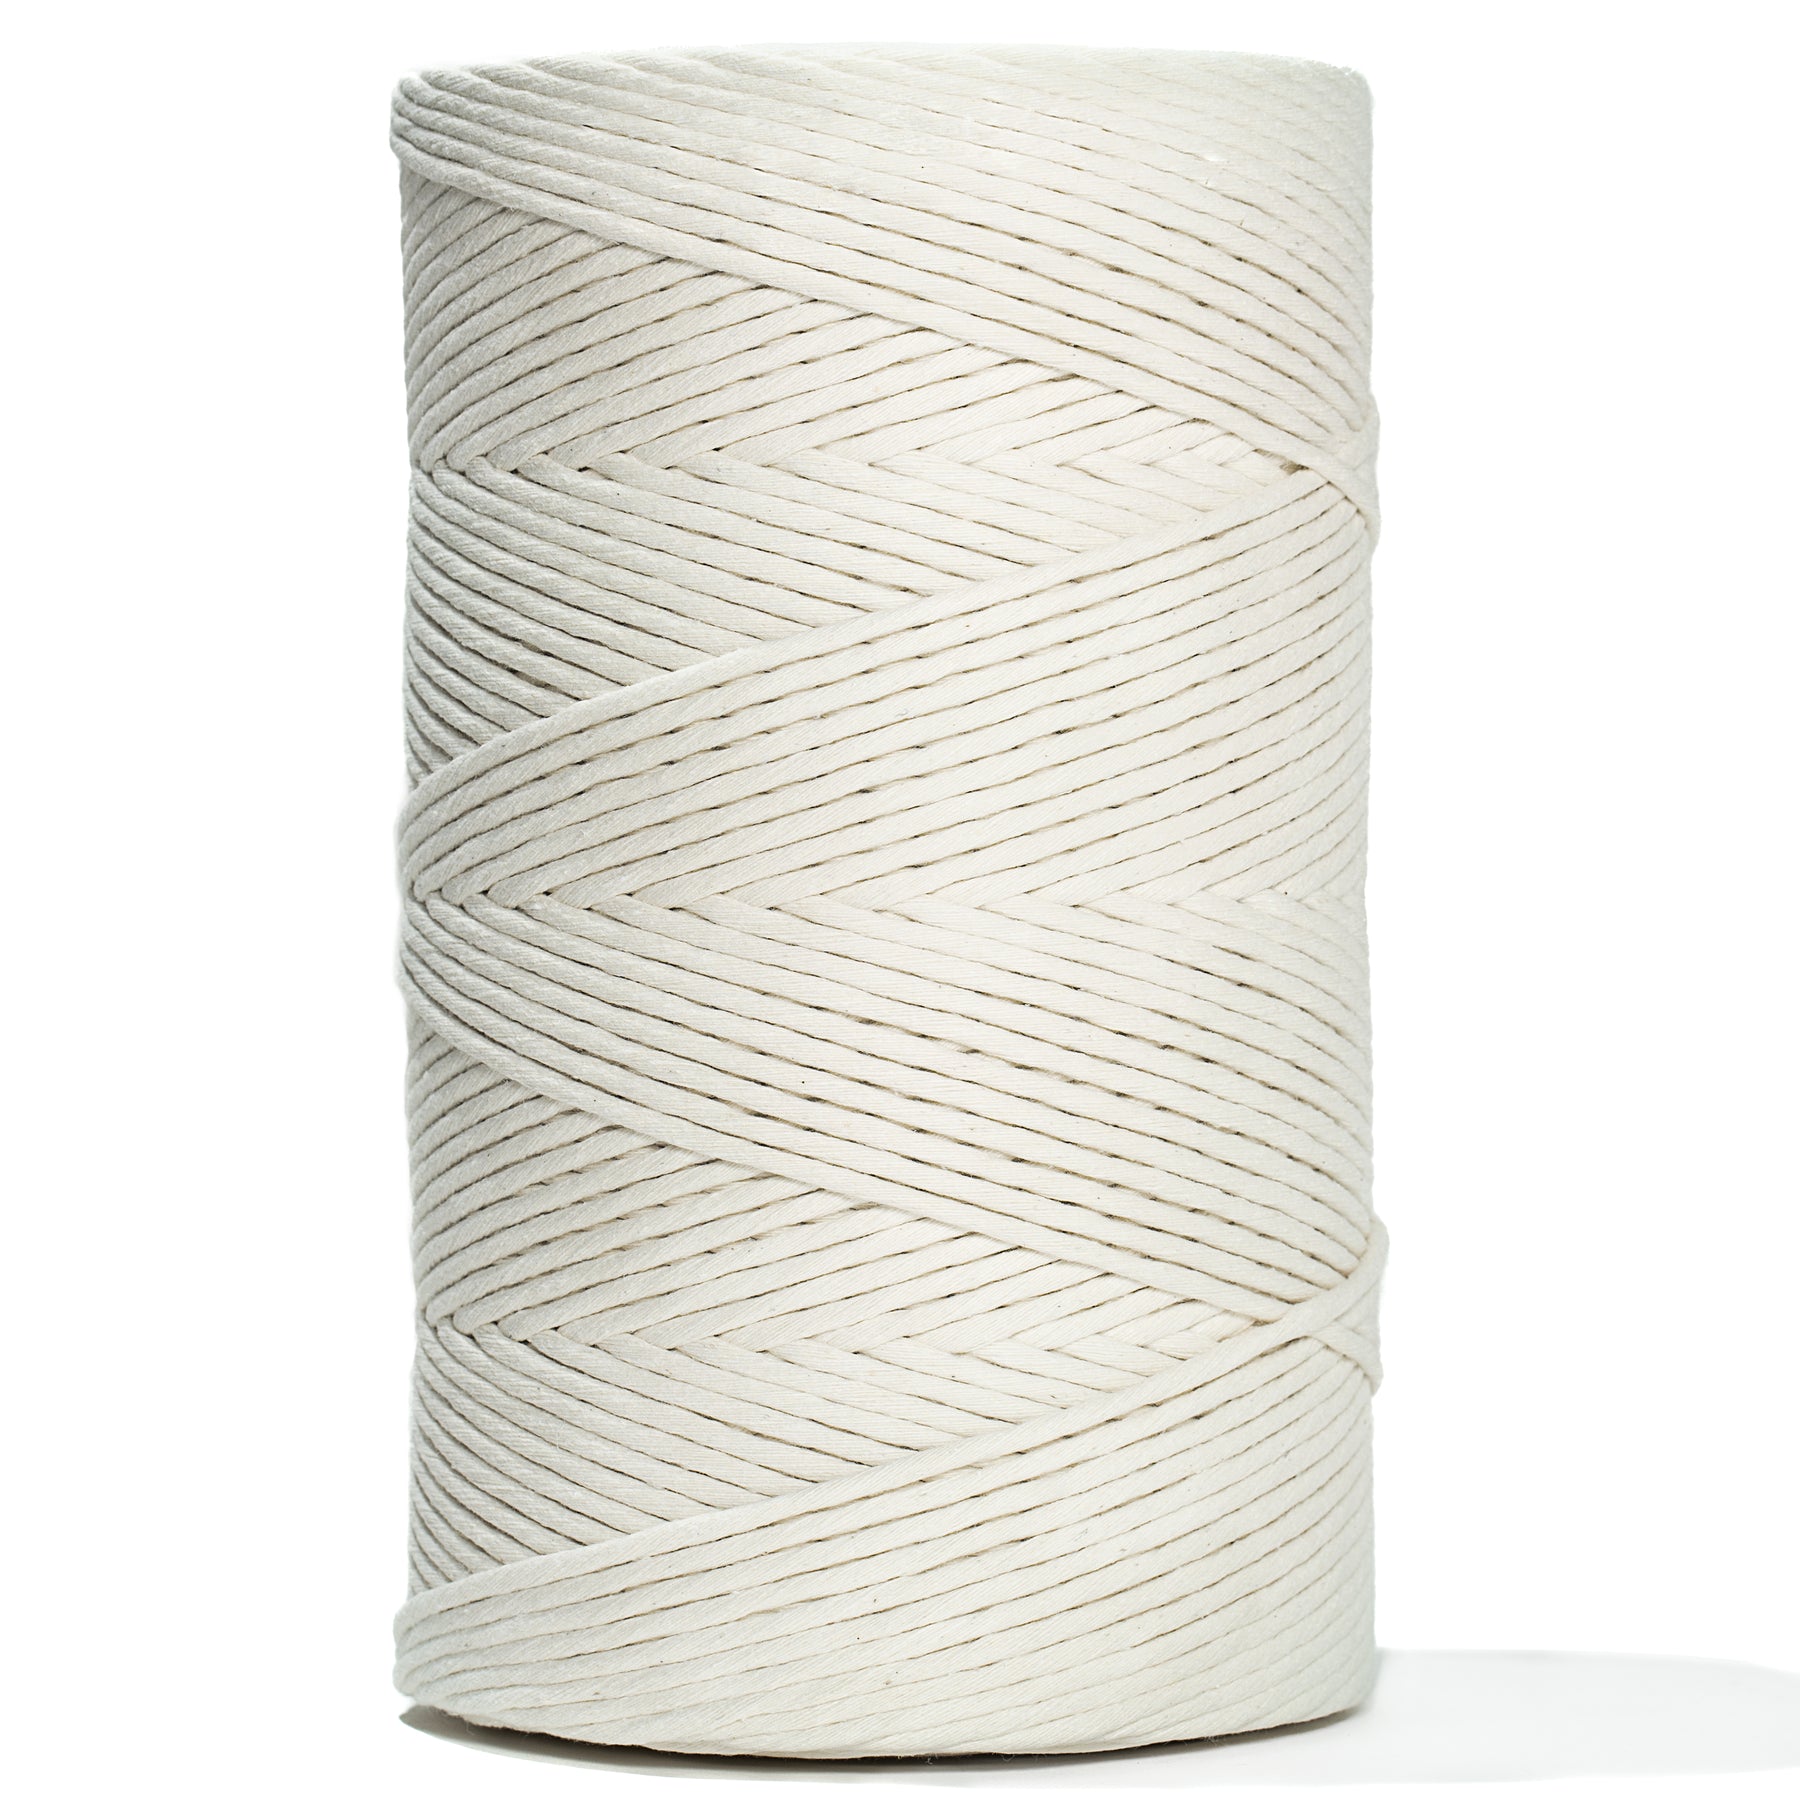 Pepperell Cotton Macramé Cord - Natural, 4 mm, 400 ft